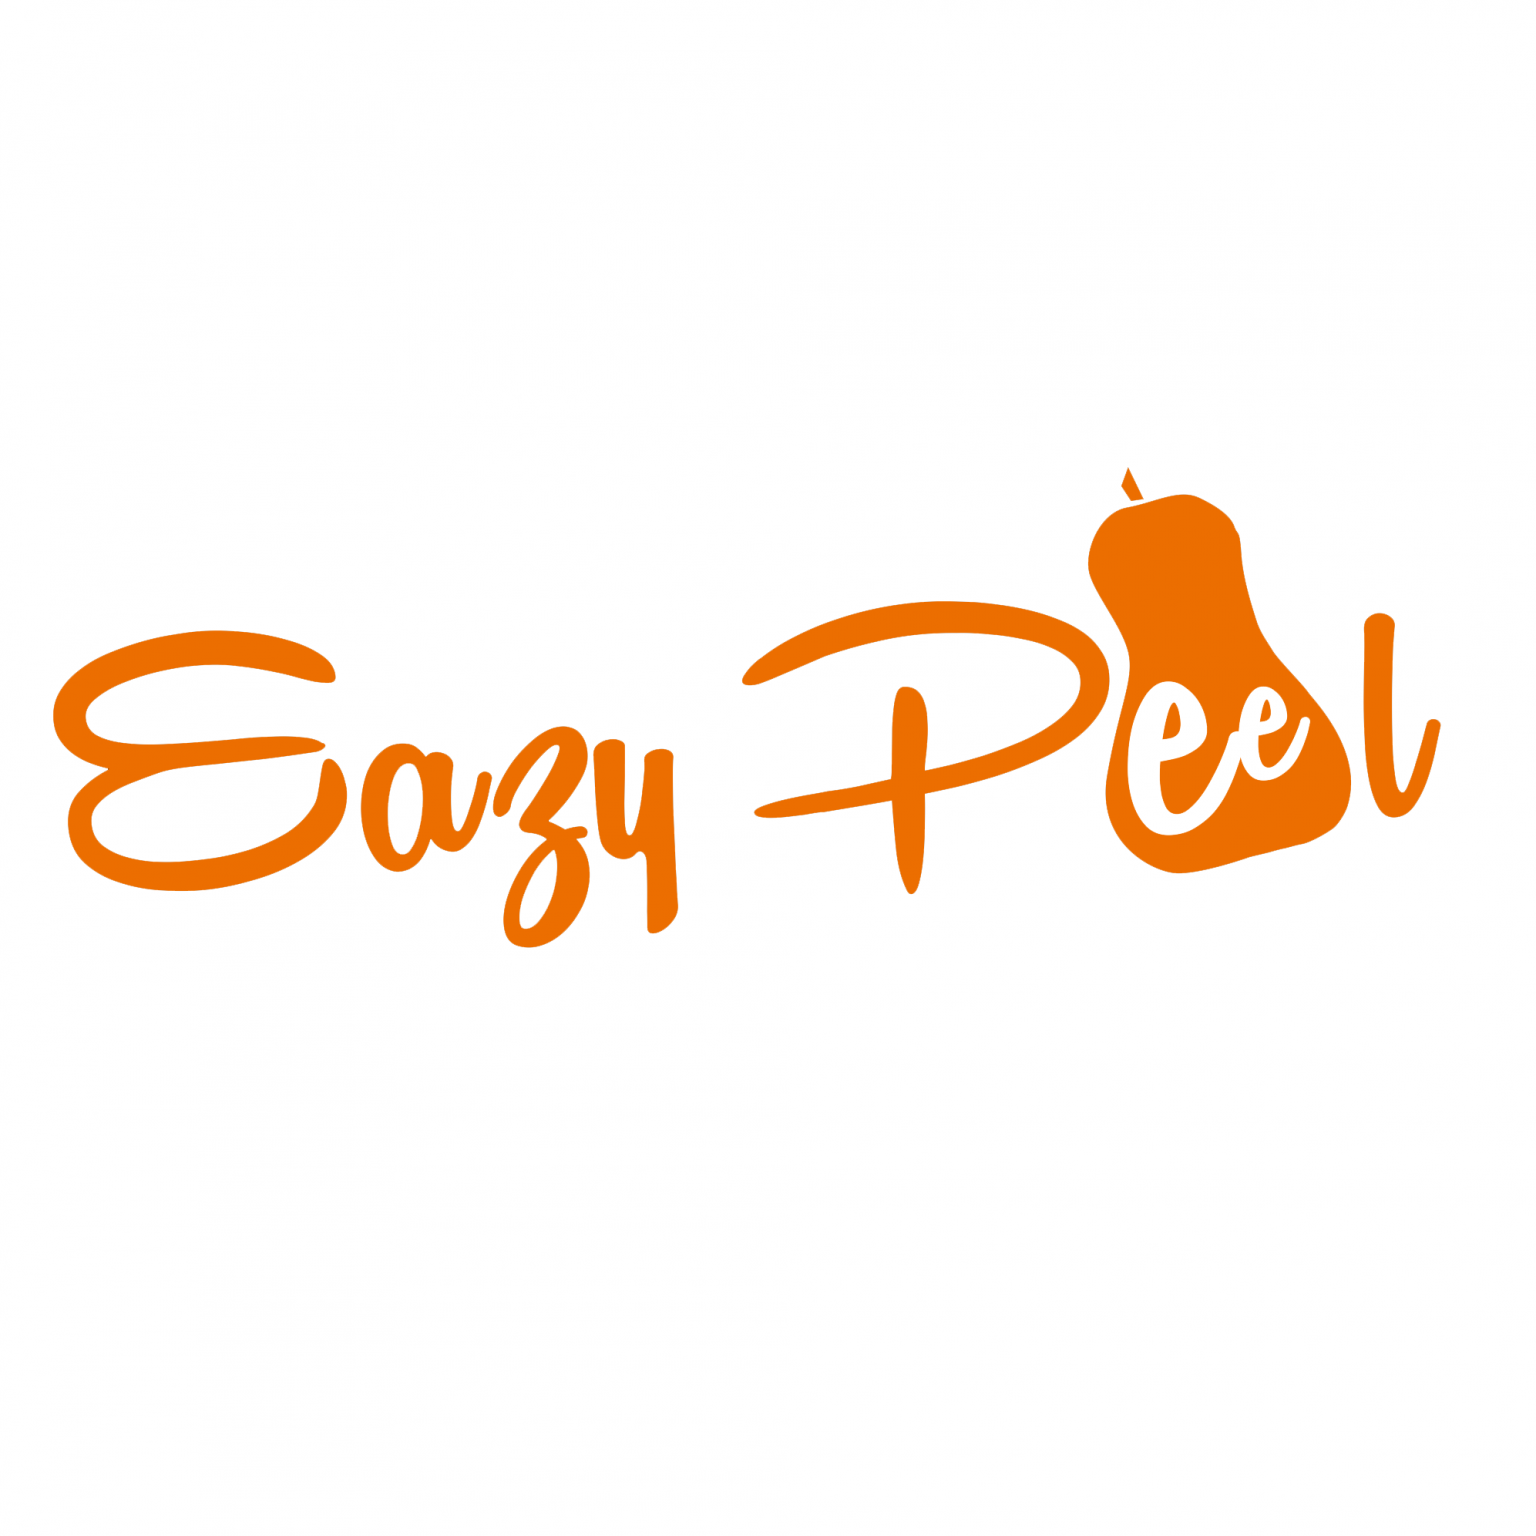 The Ultimate Butternut Squash Peeler – Eazy Peel